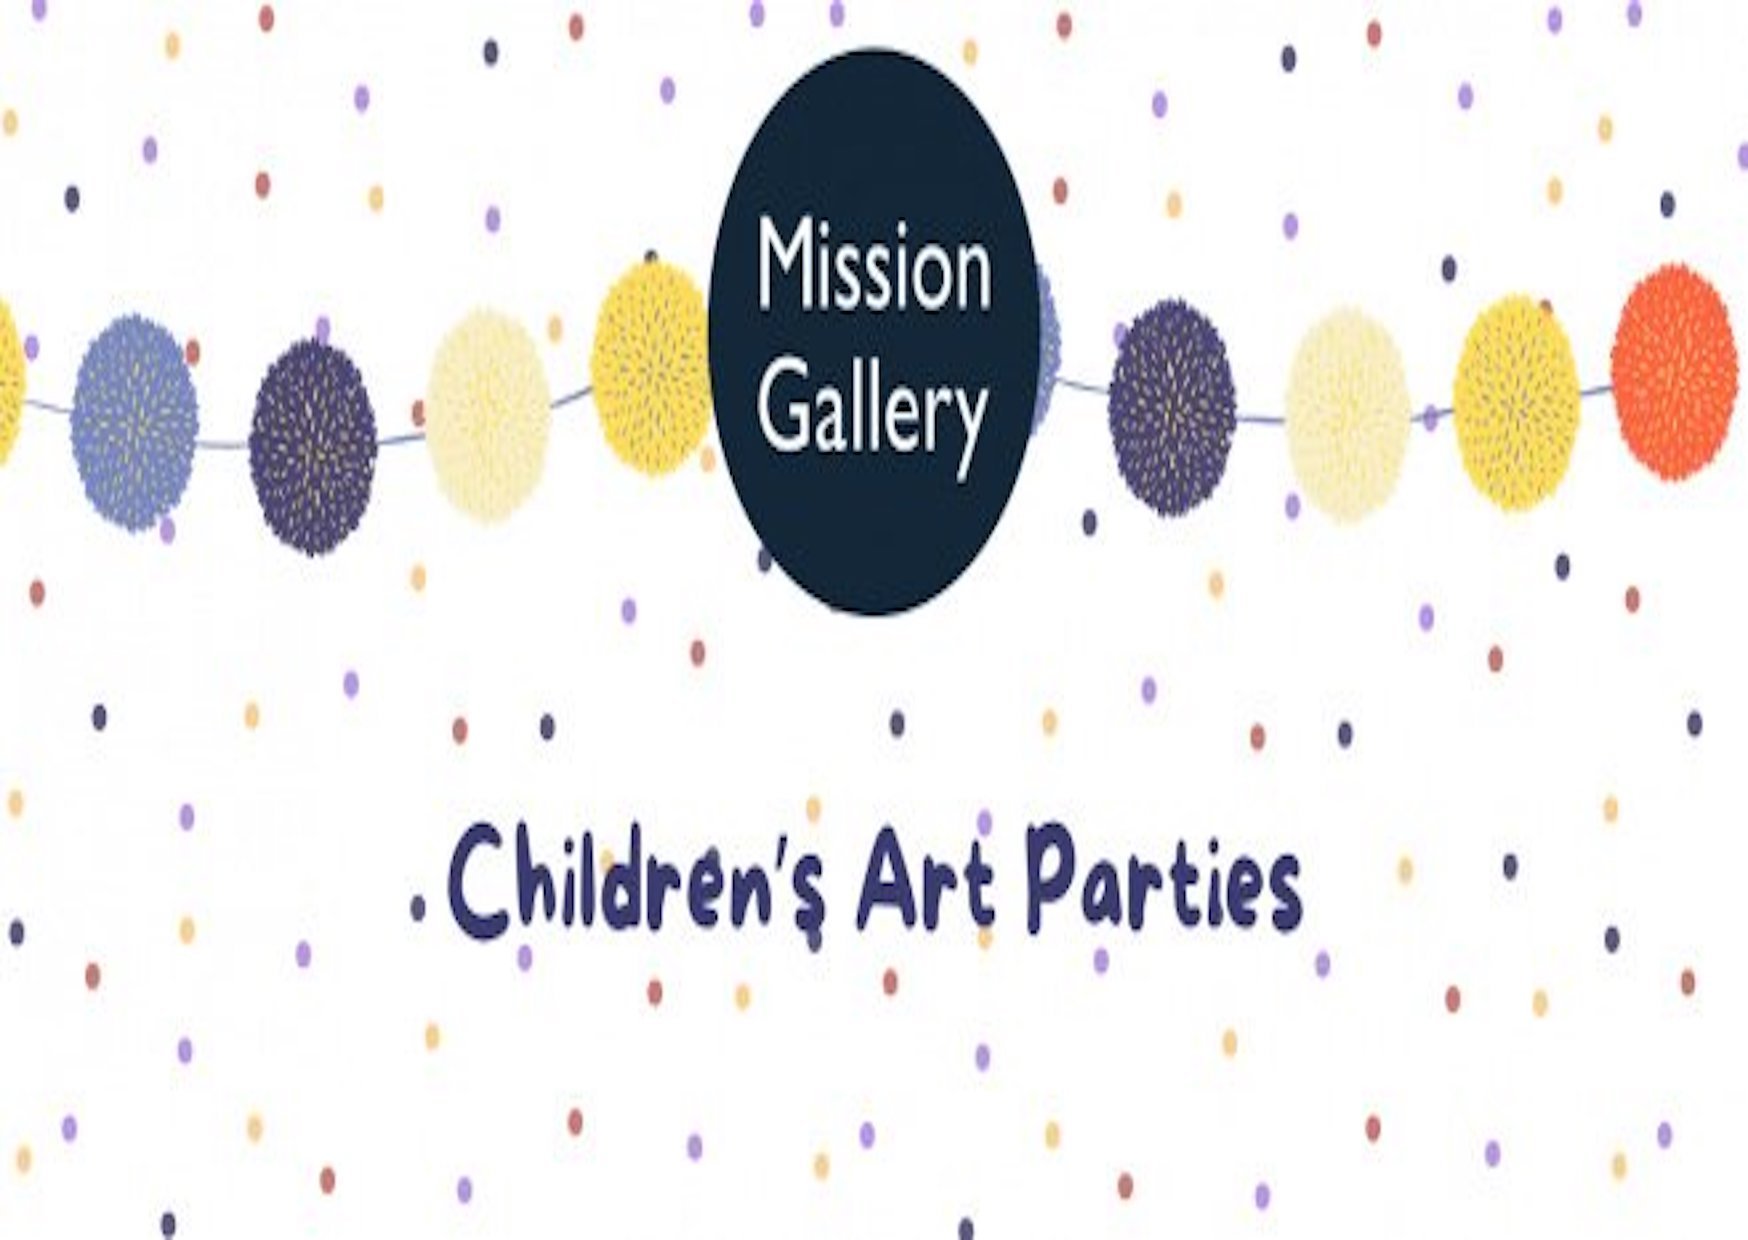 Art & craft parties for children